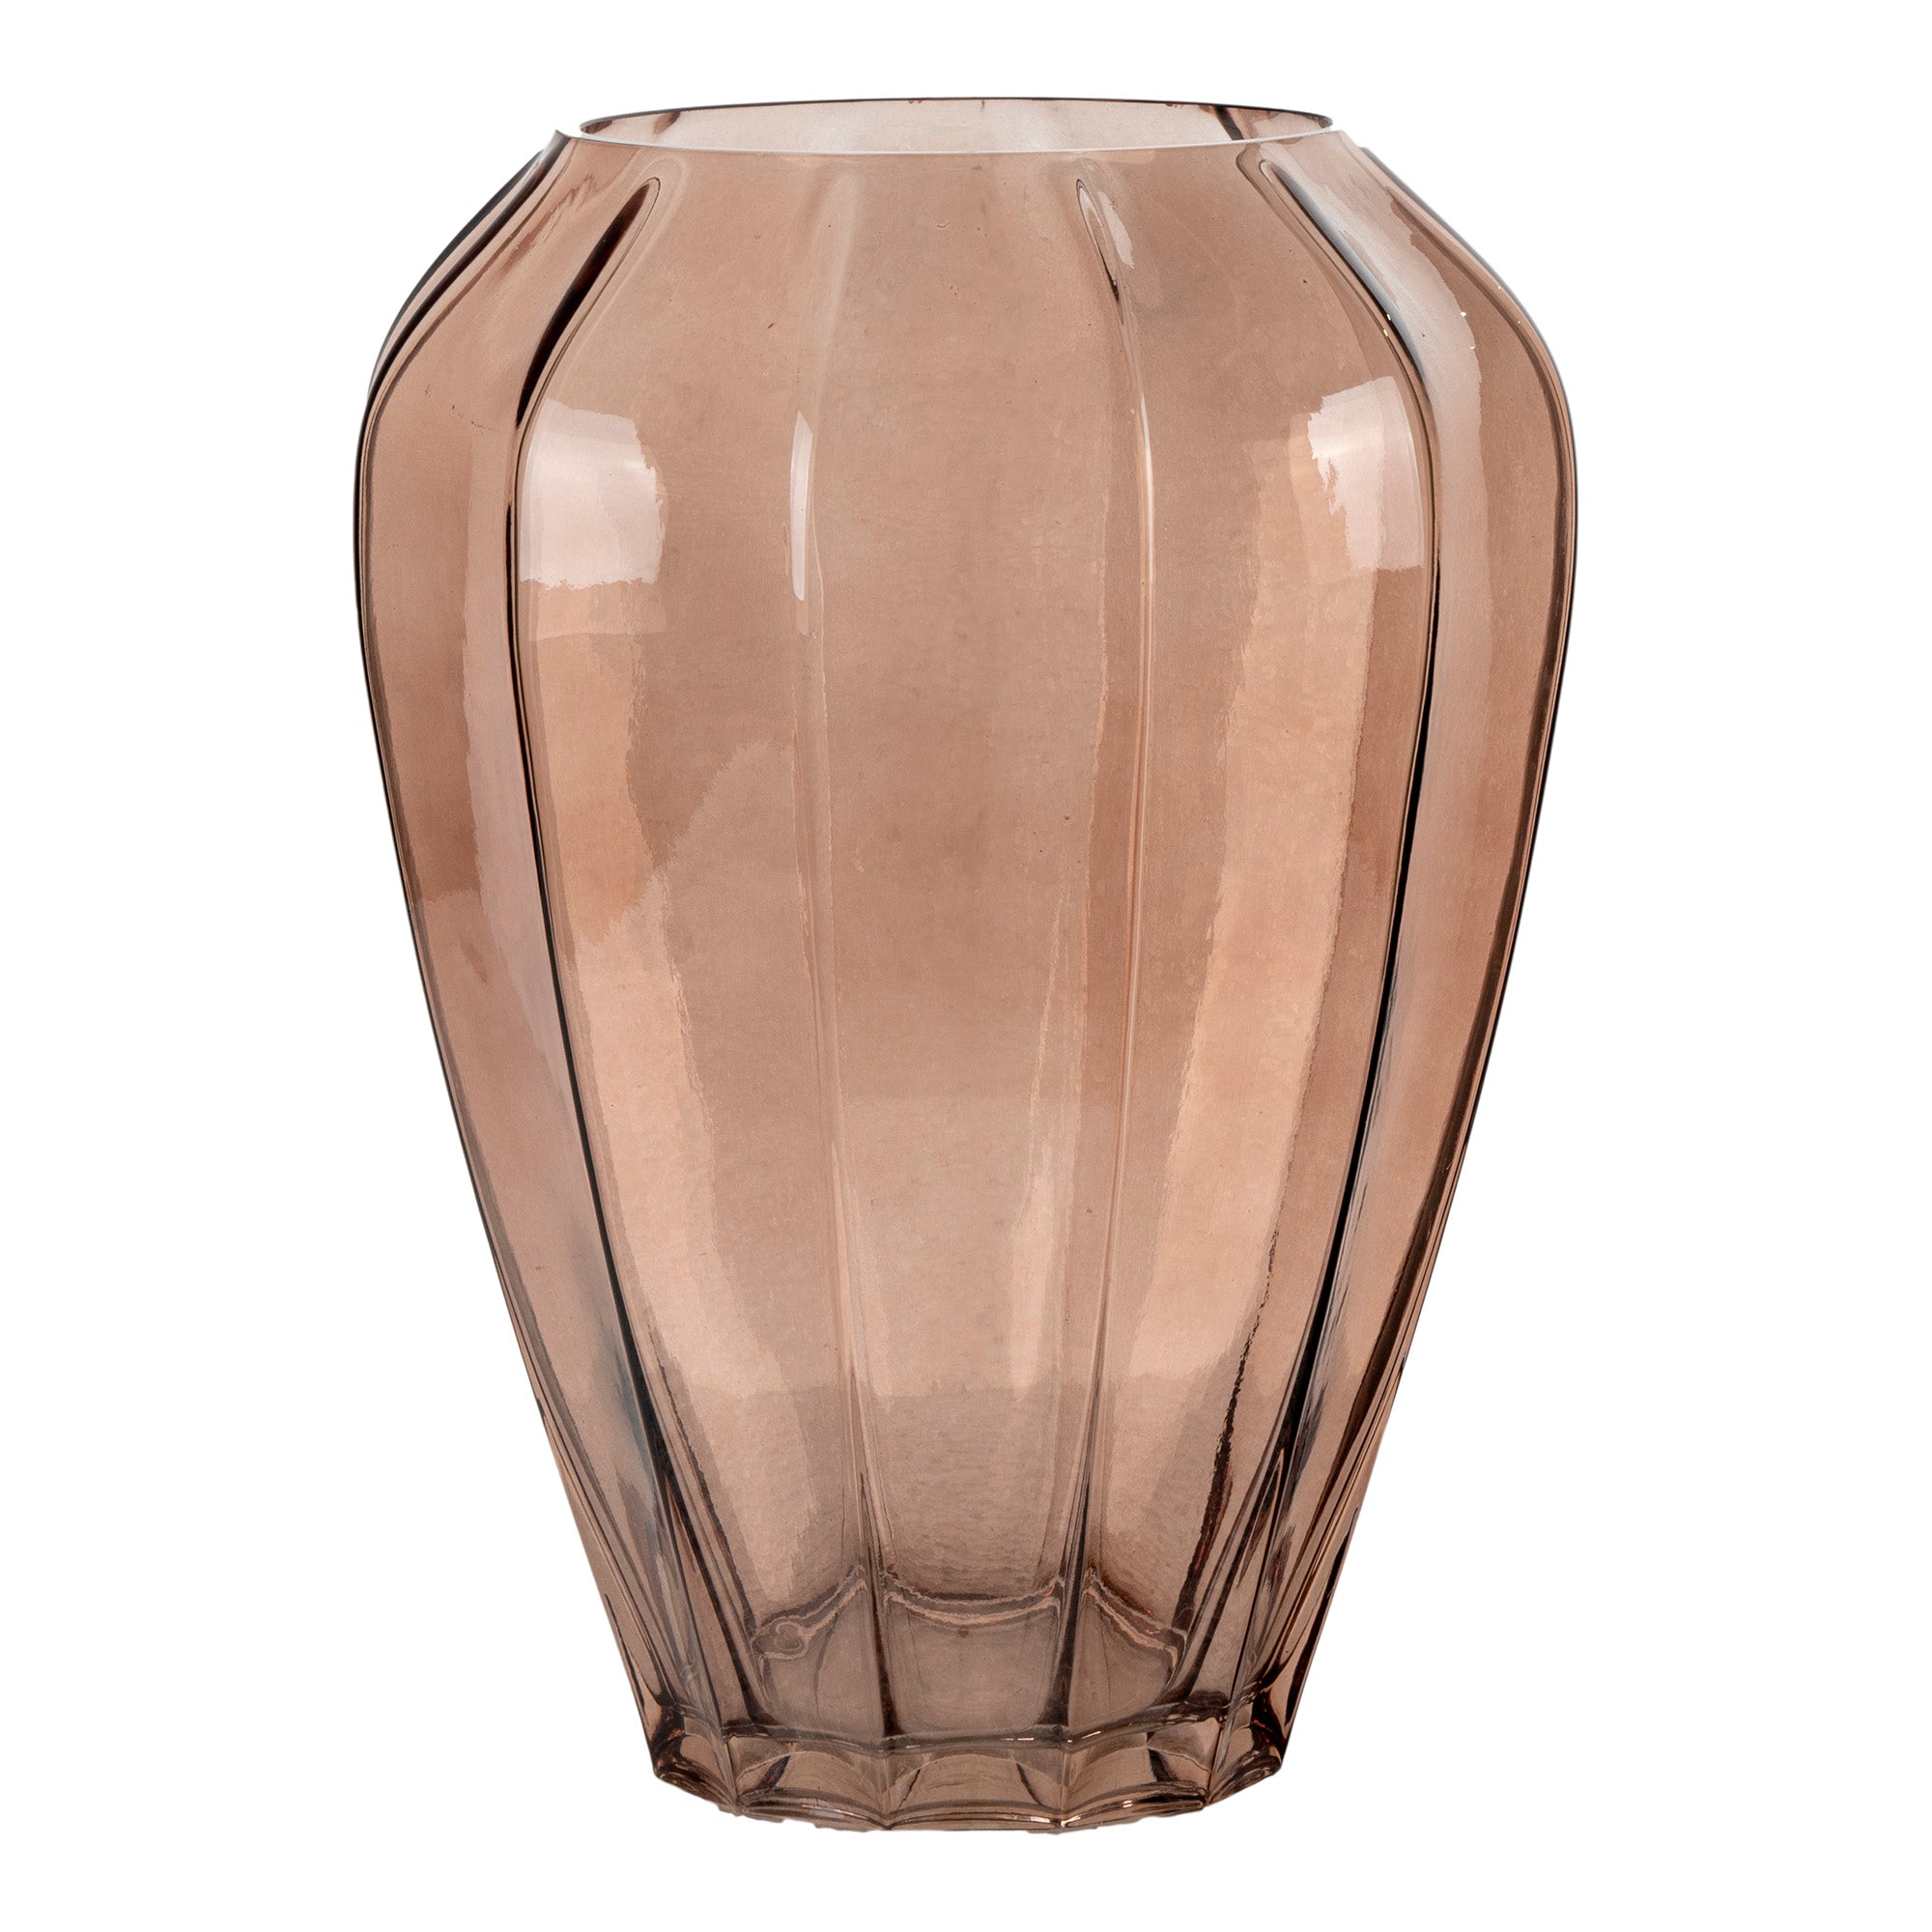 Vase - Vase I Glas, Brun, Ø22X29 Cm ⎮ 5713917022168 ⎮ 4441375 